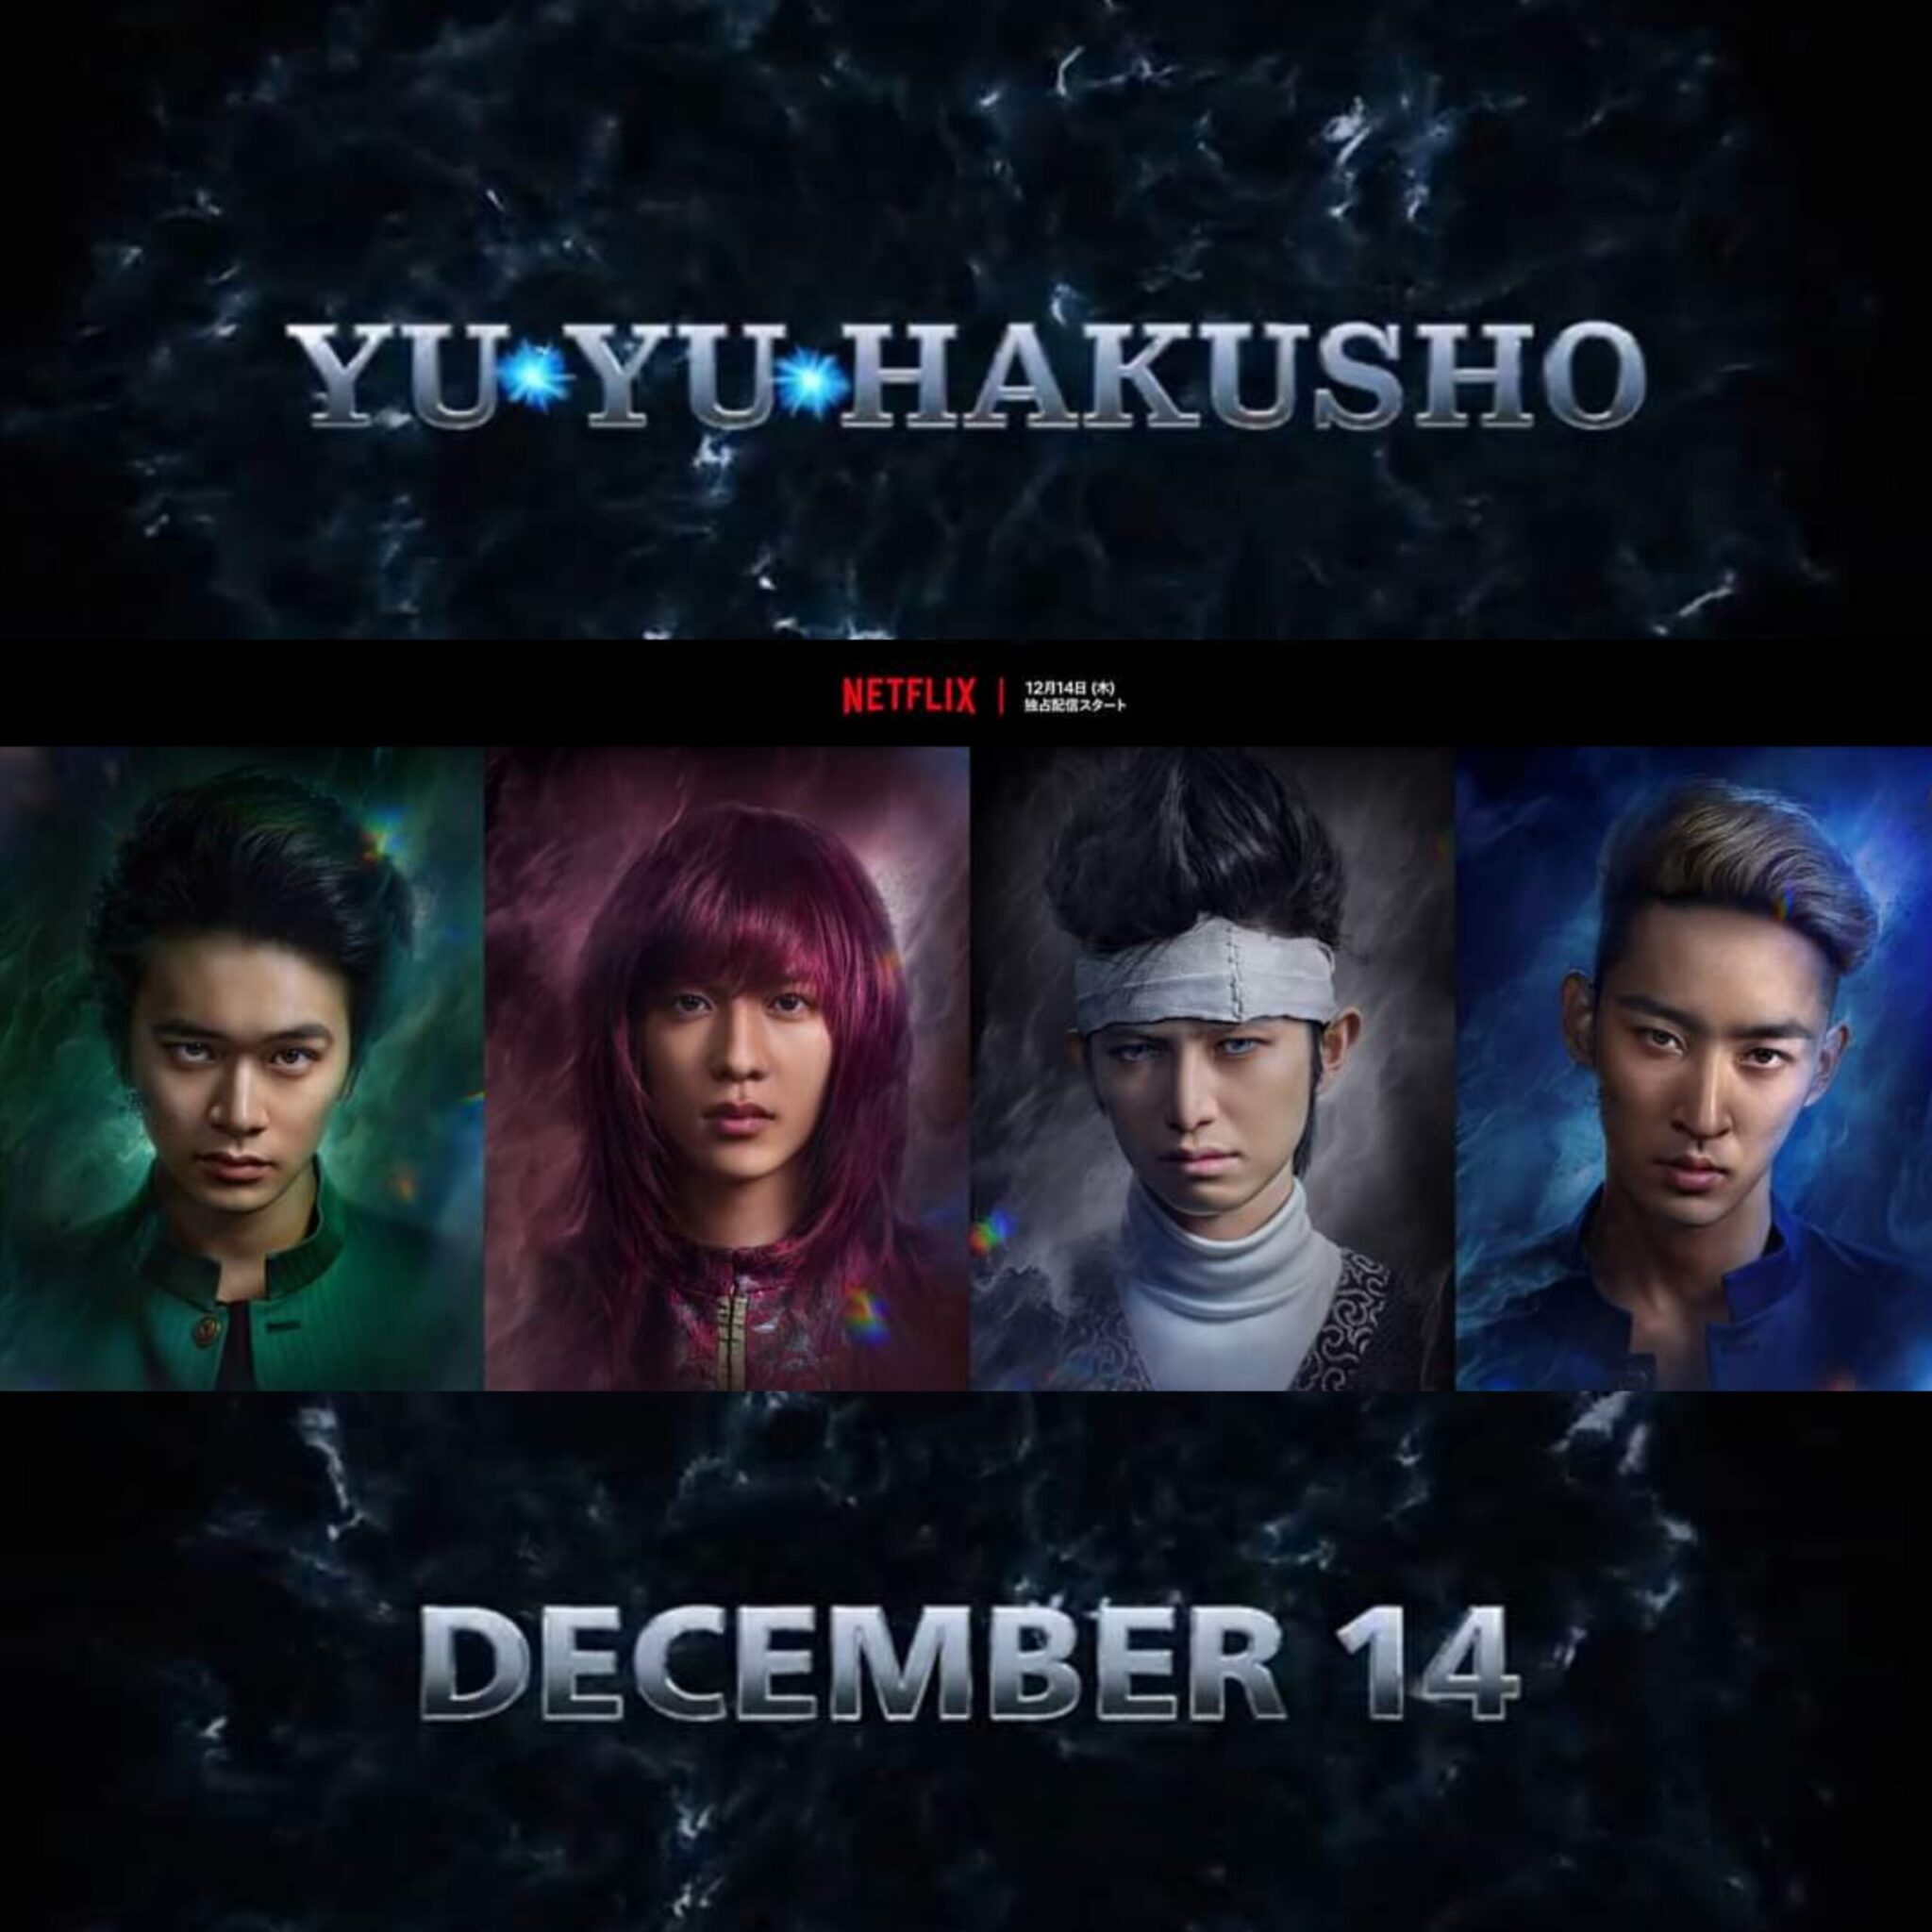 Yu Yu Hakusho comes to life on Netflix on December 14